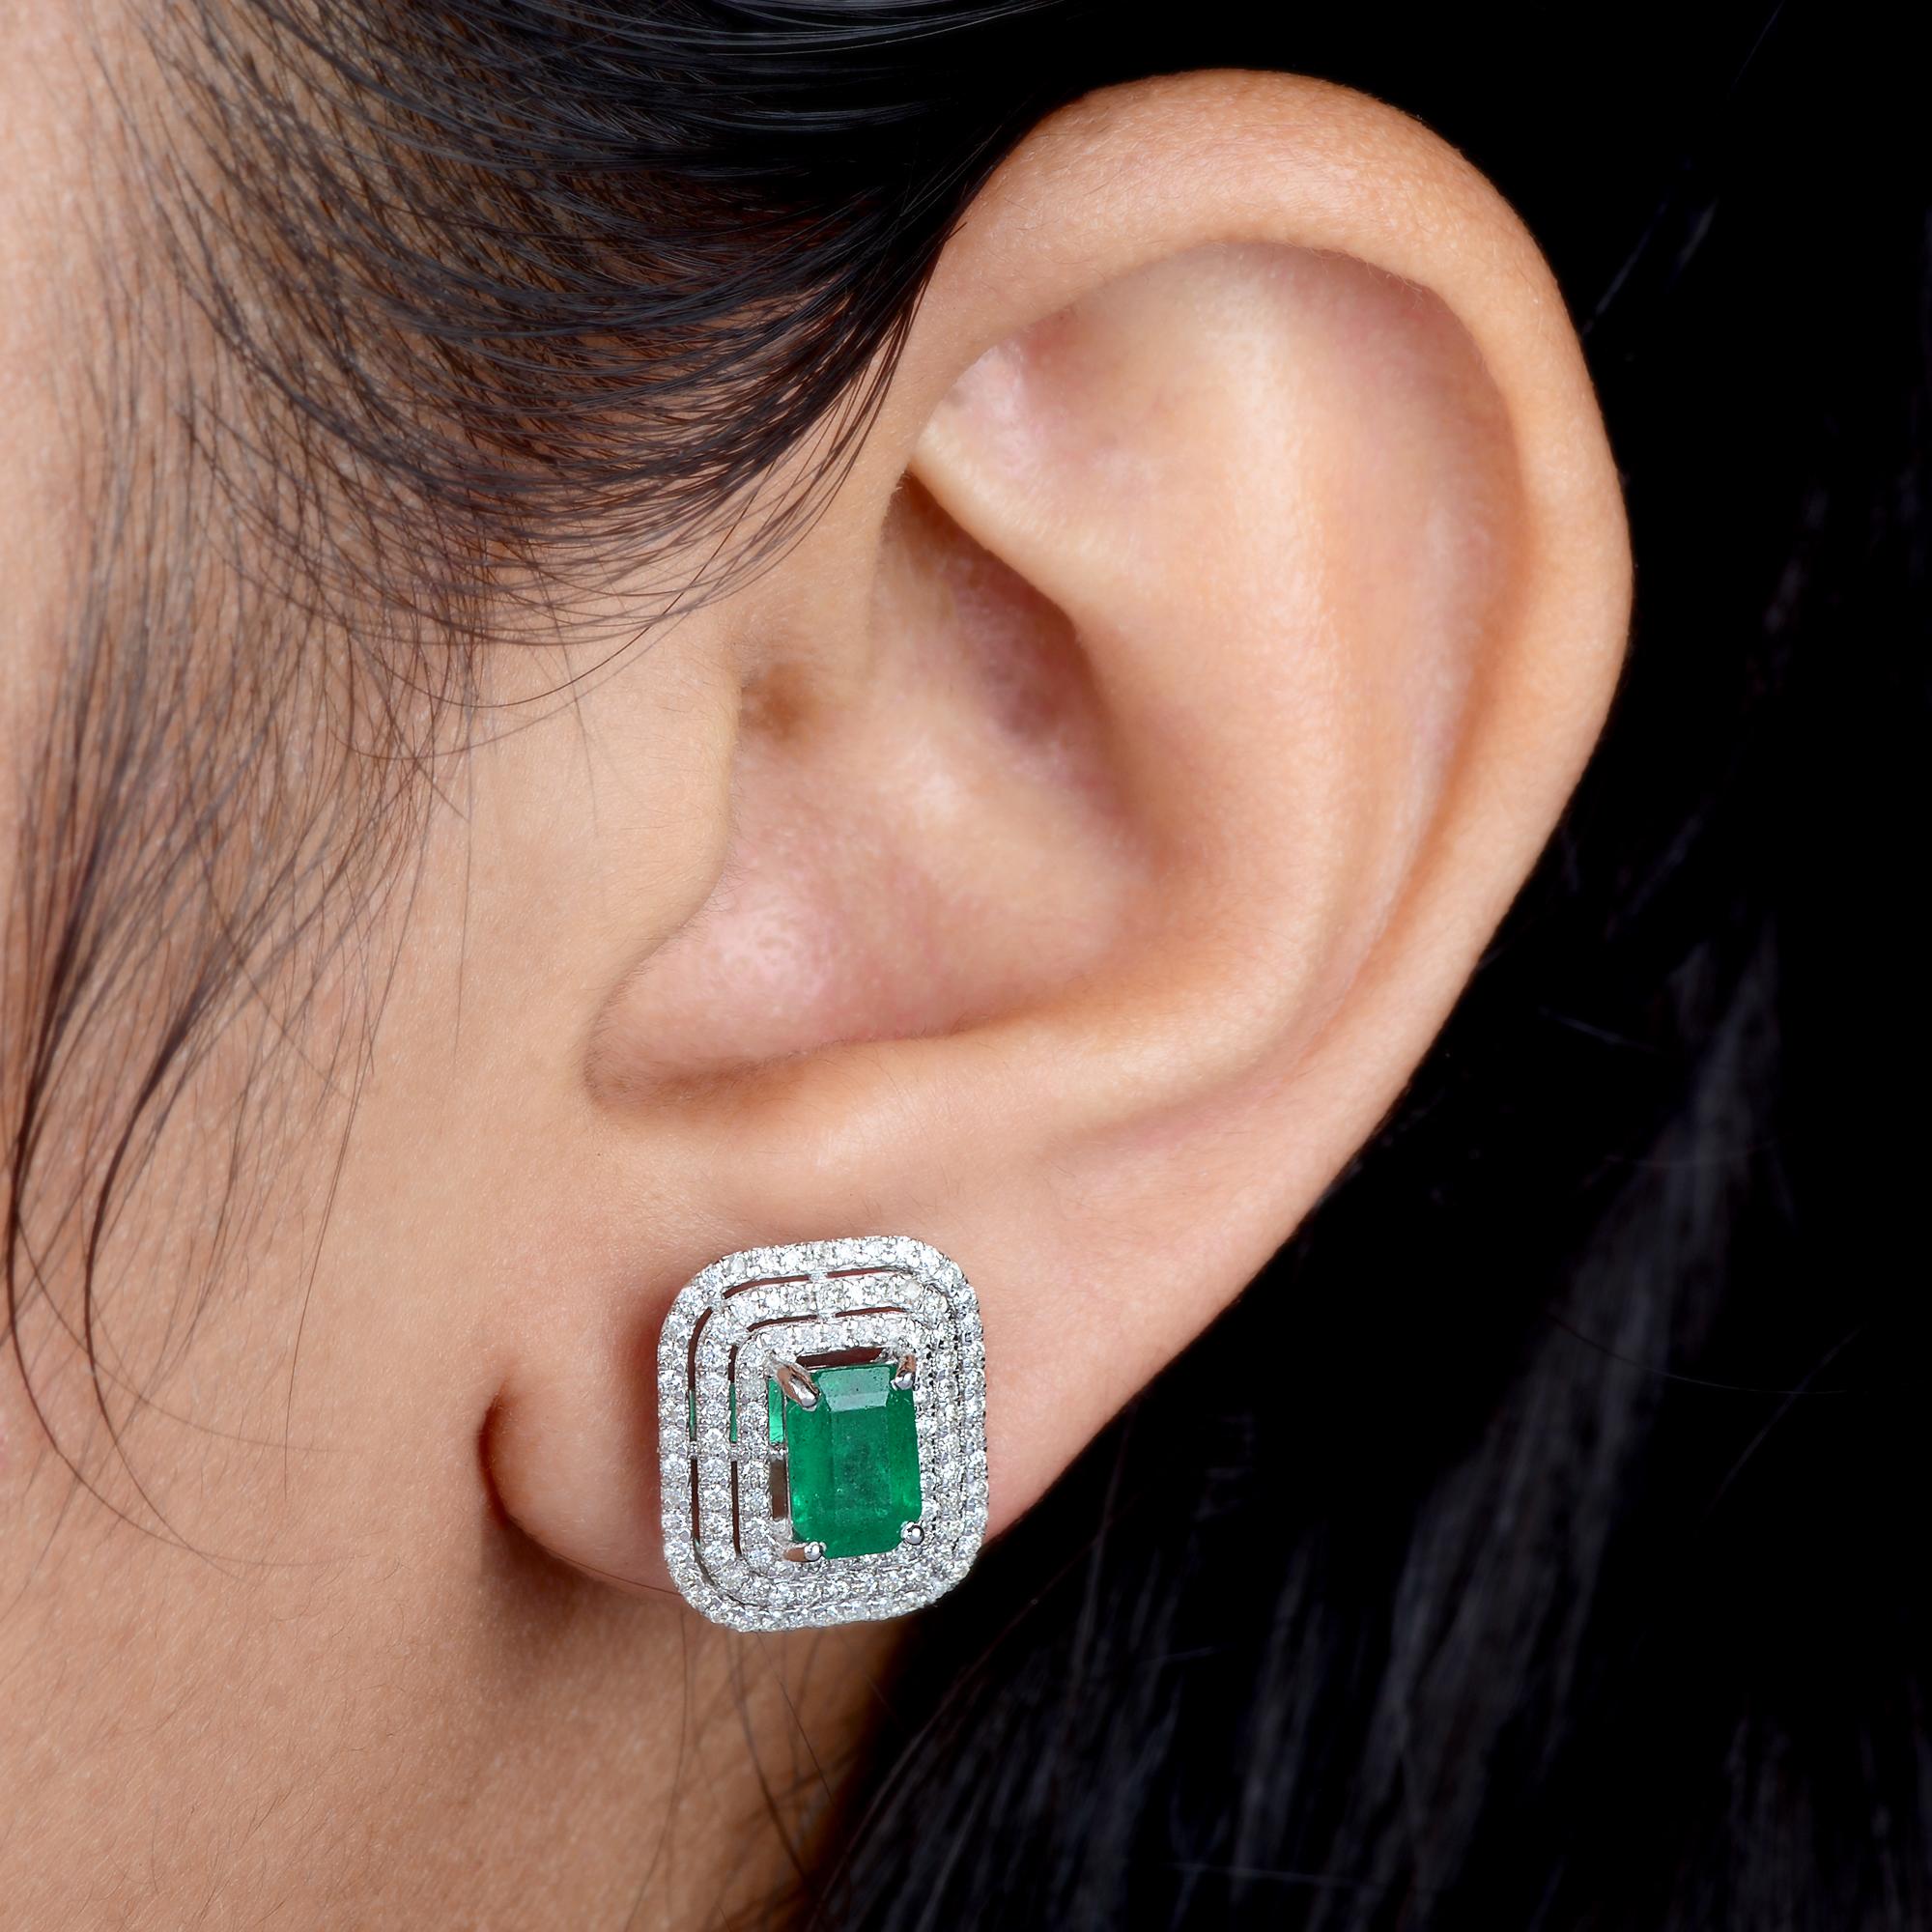 Emerald Cut Zambian Emerald Gemstone Stud Earrings Diamond Pave Solid 14k White Gold Jewelry For Sale